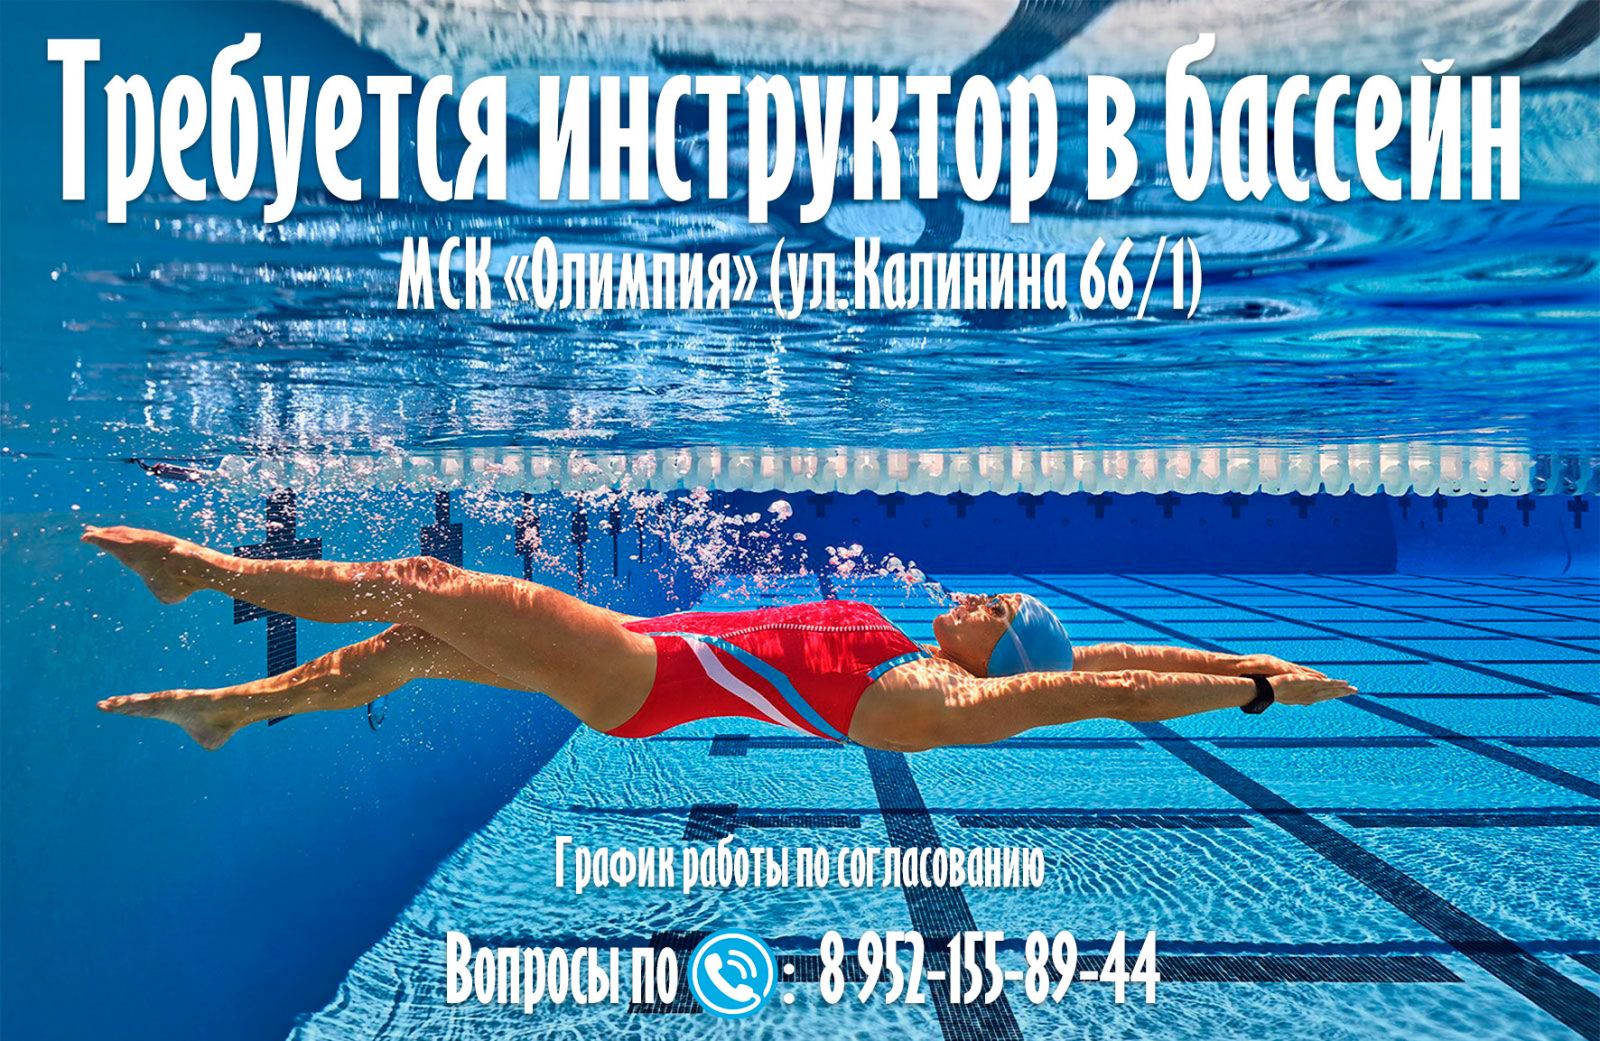 Егорова л б. 14 15 16 Февраля Олимпия плавание. Дрожжаное бассейн тренер.